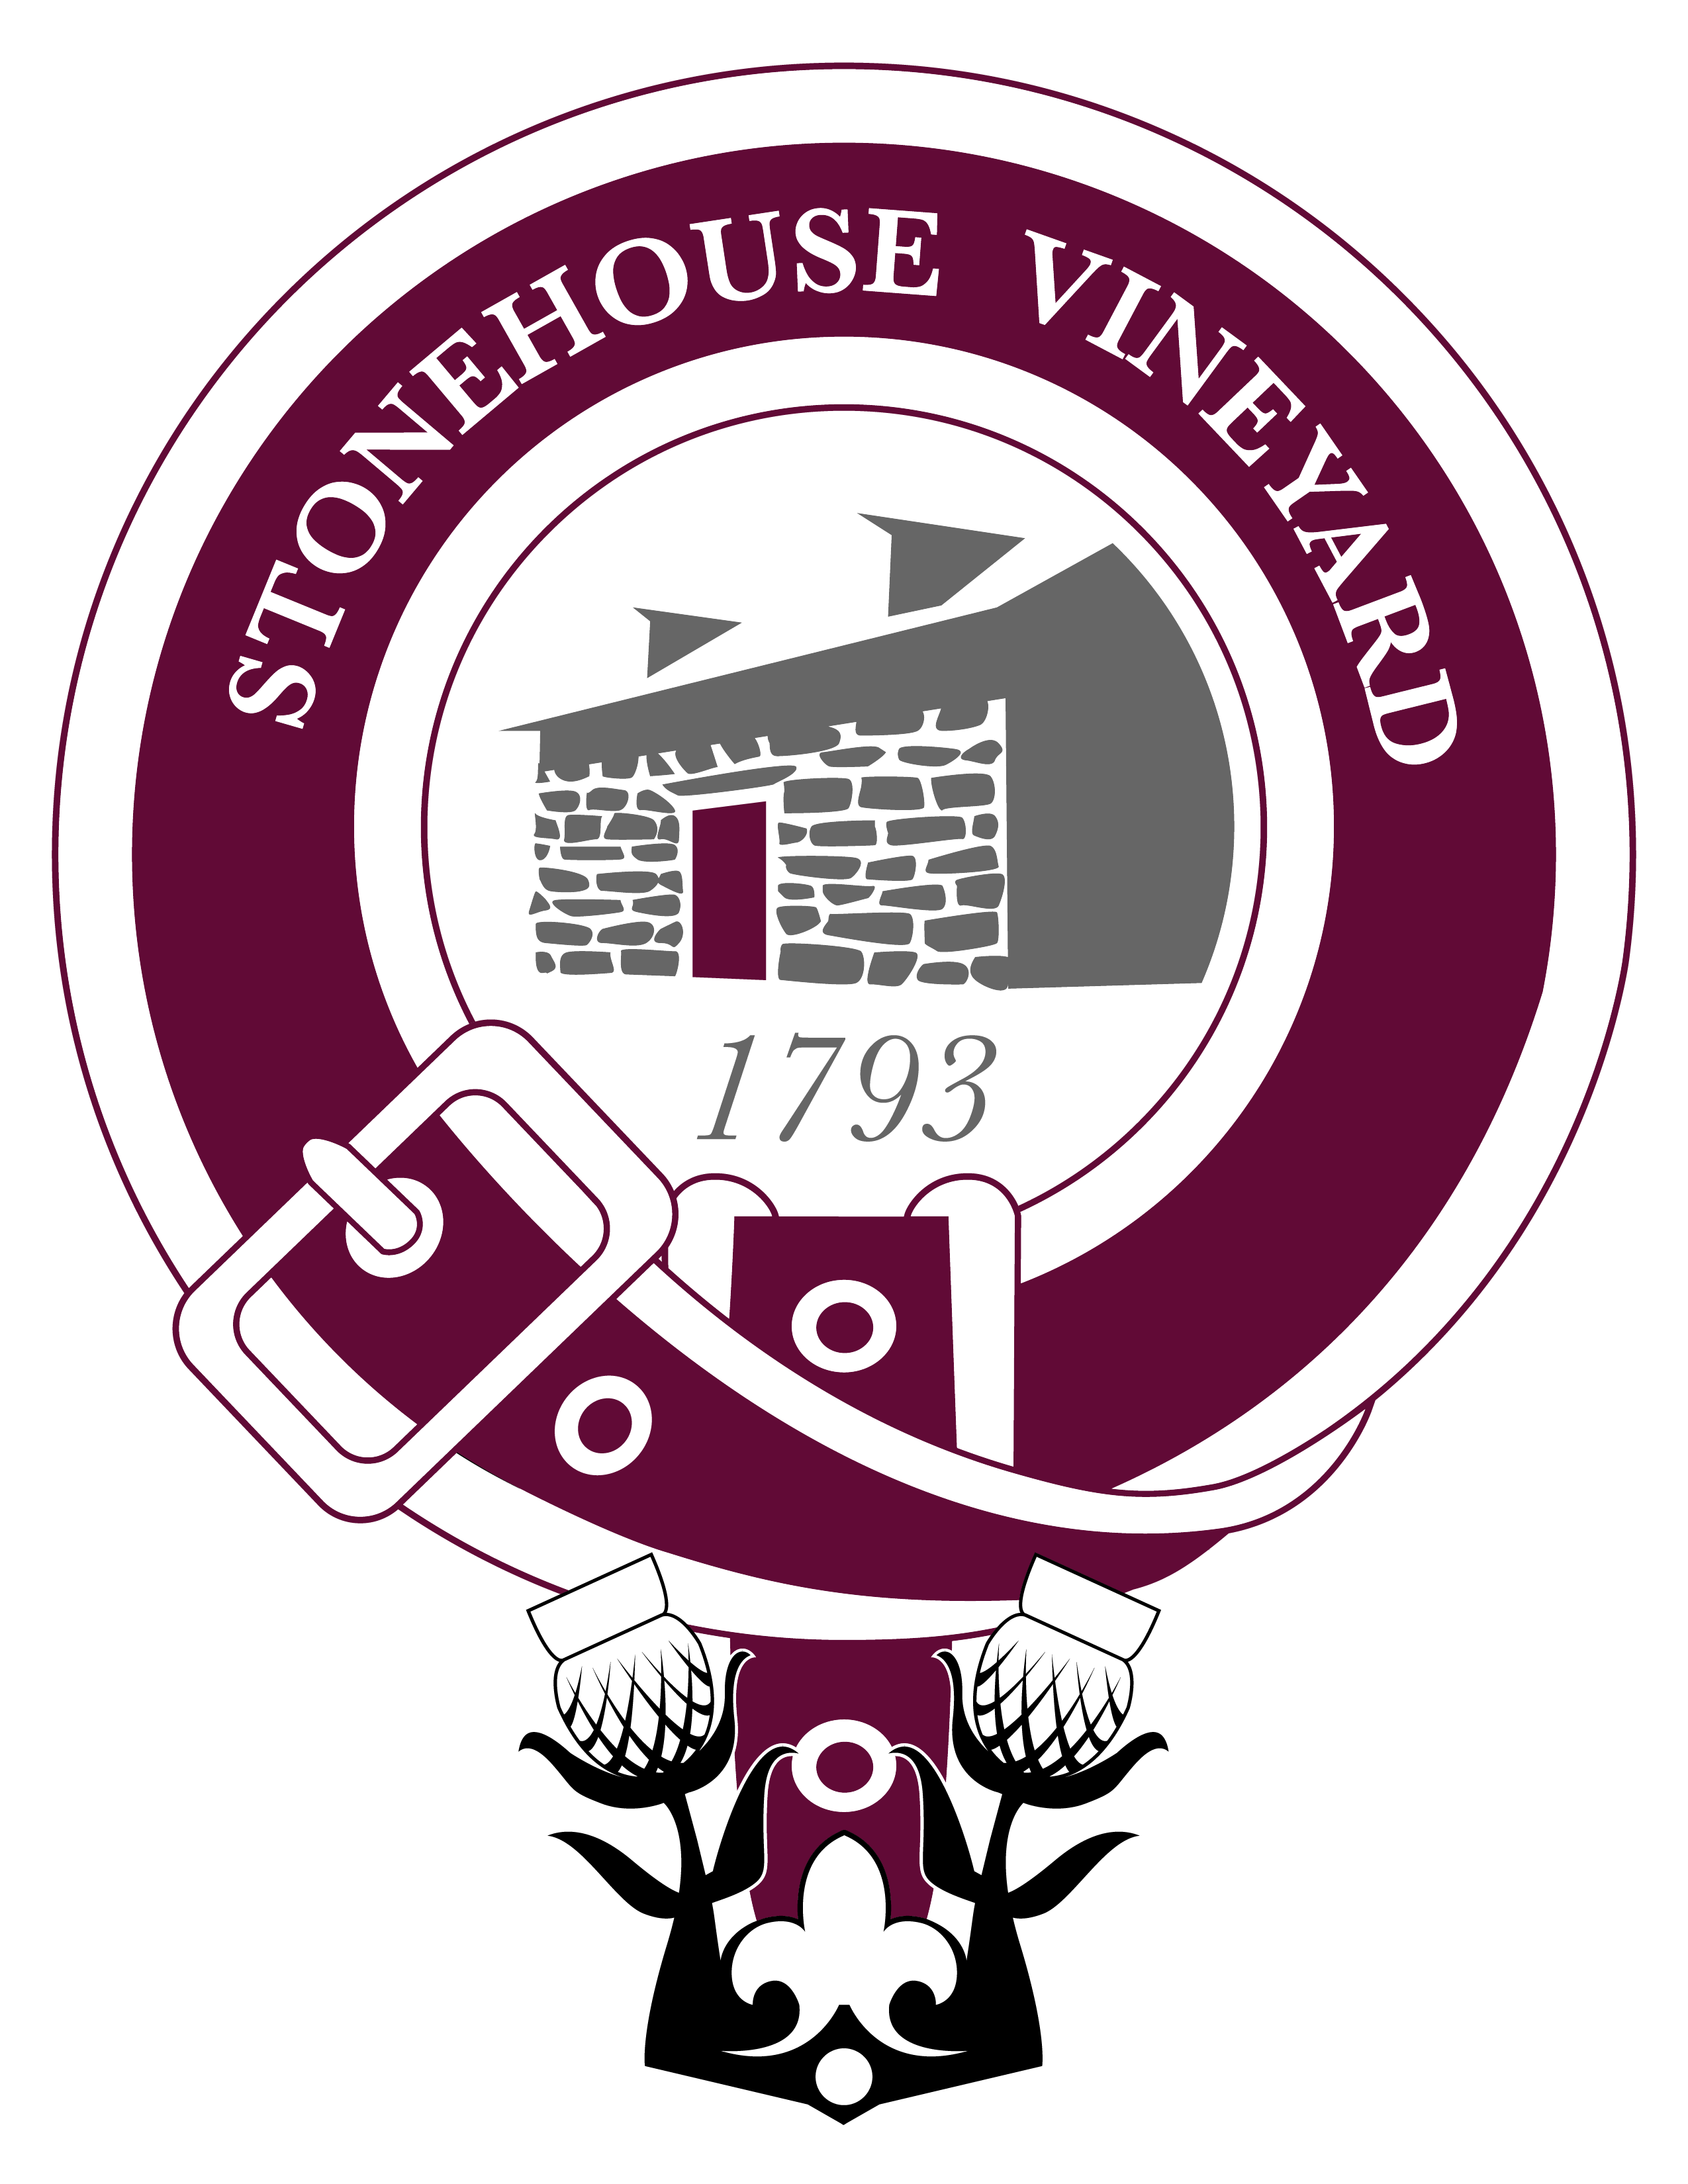 Stonehouse Vineyard Gift Certificate $50